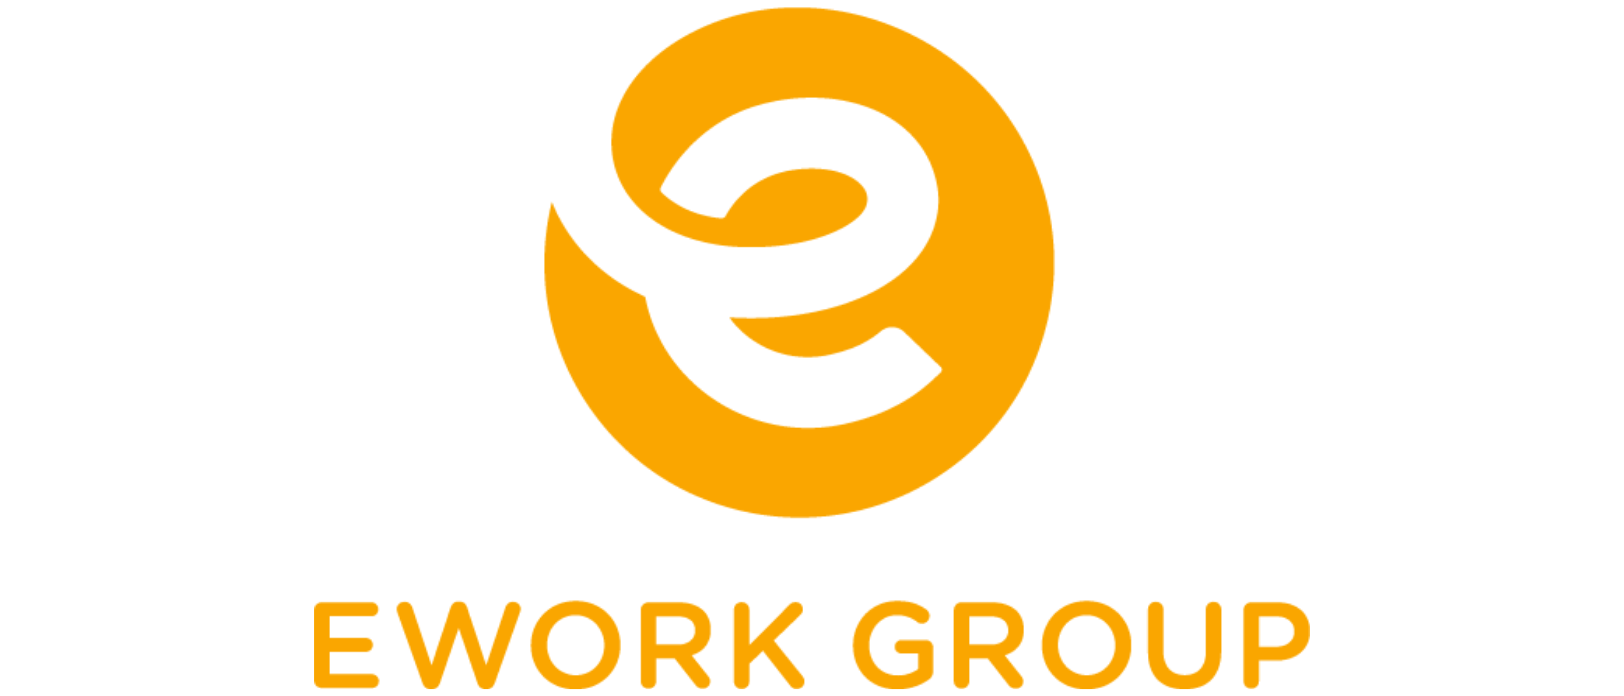 ework logo strona